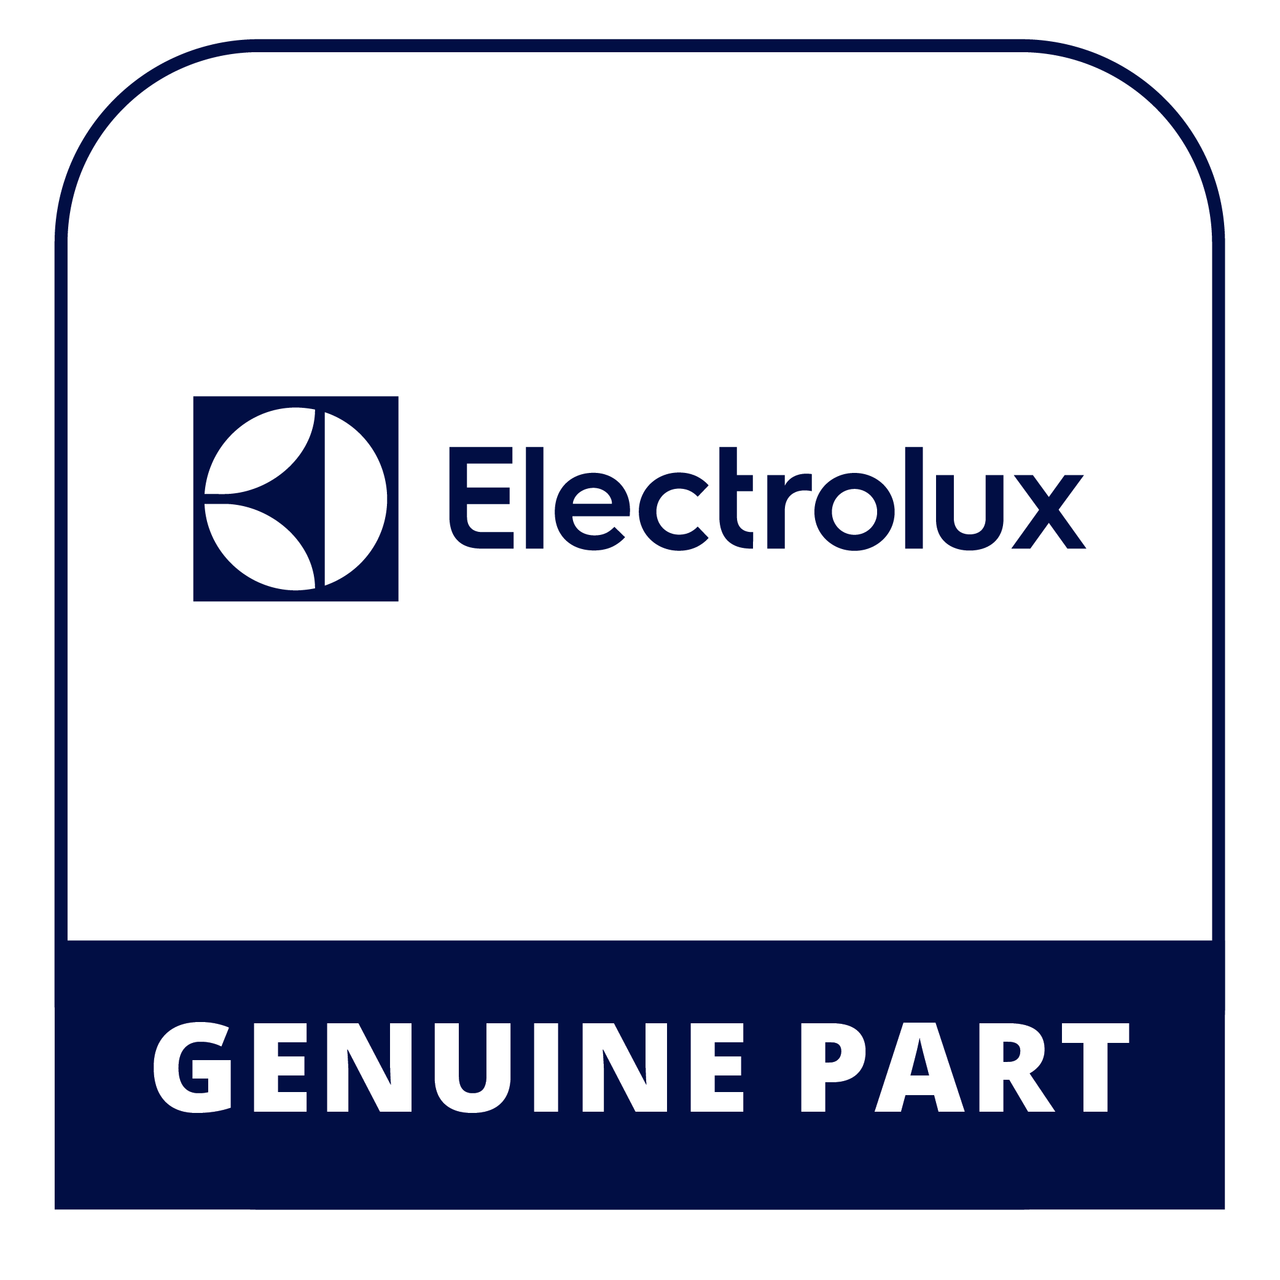 Frigidaire - Electrolux 316547400 Dsp Shield - Genuine Electrolux Part